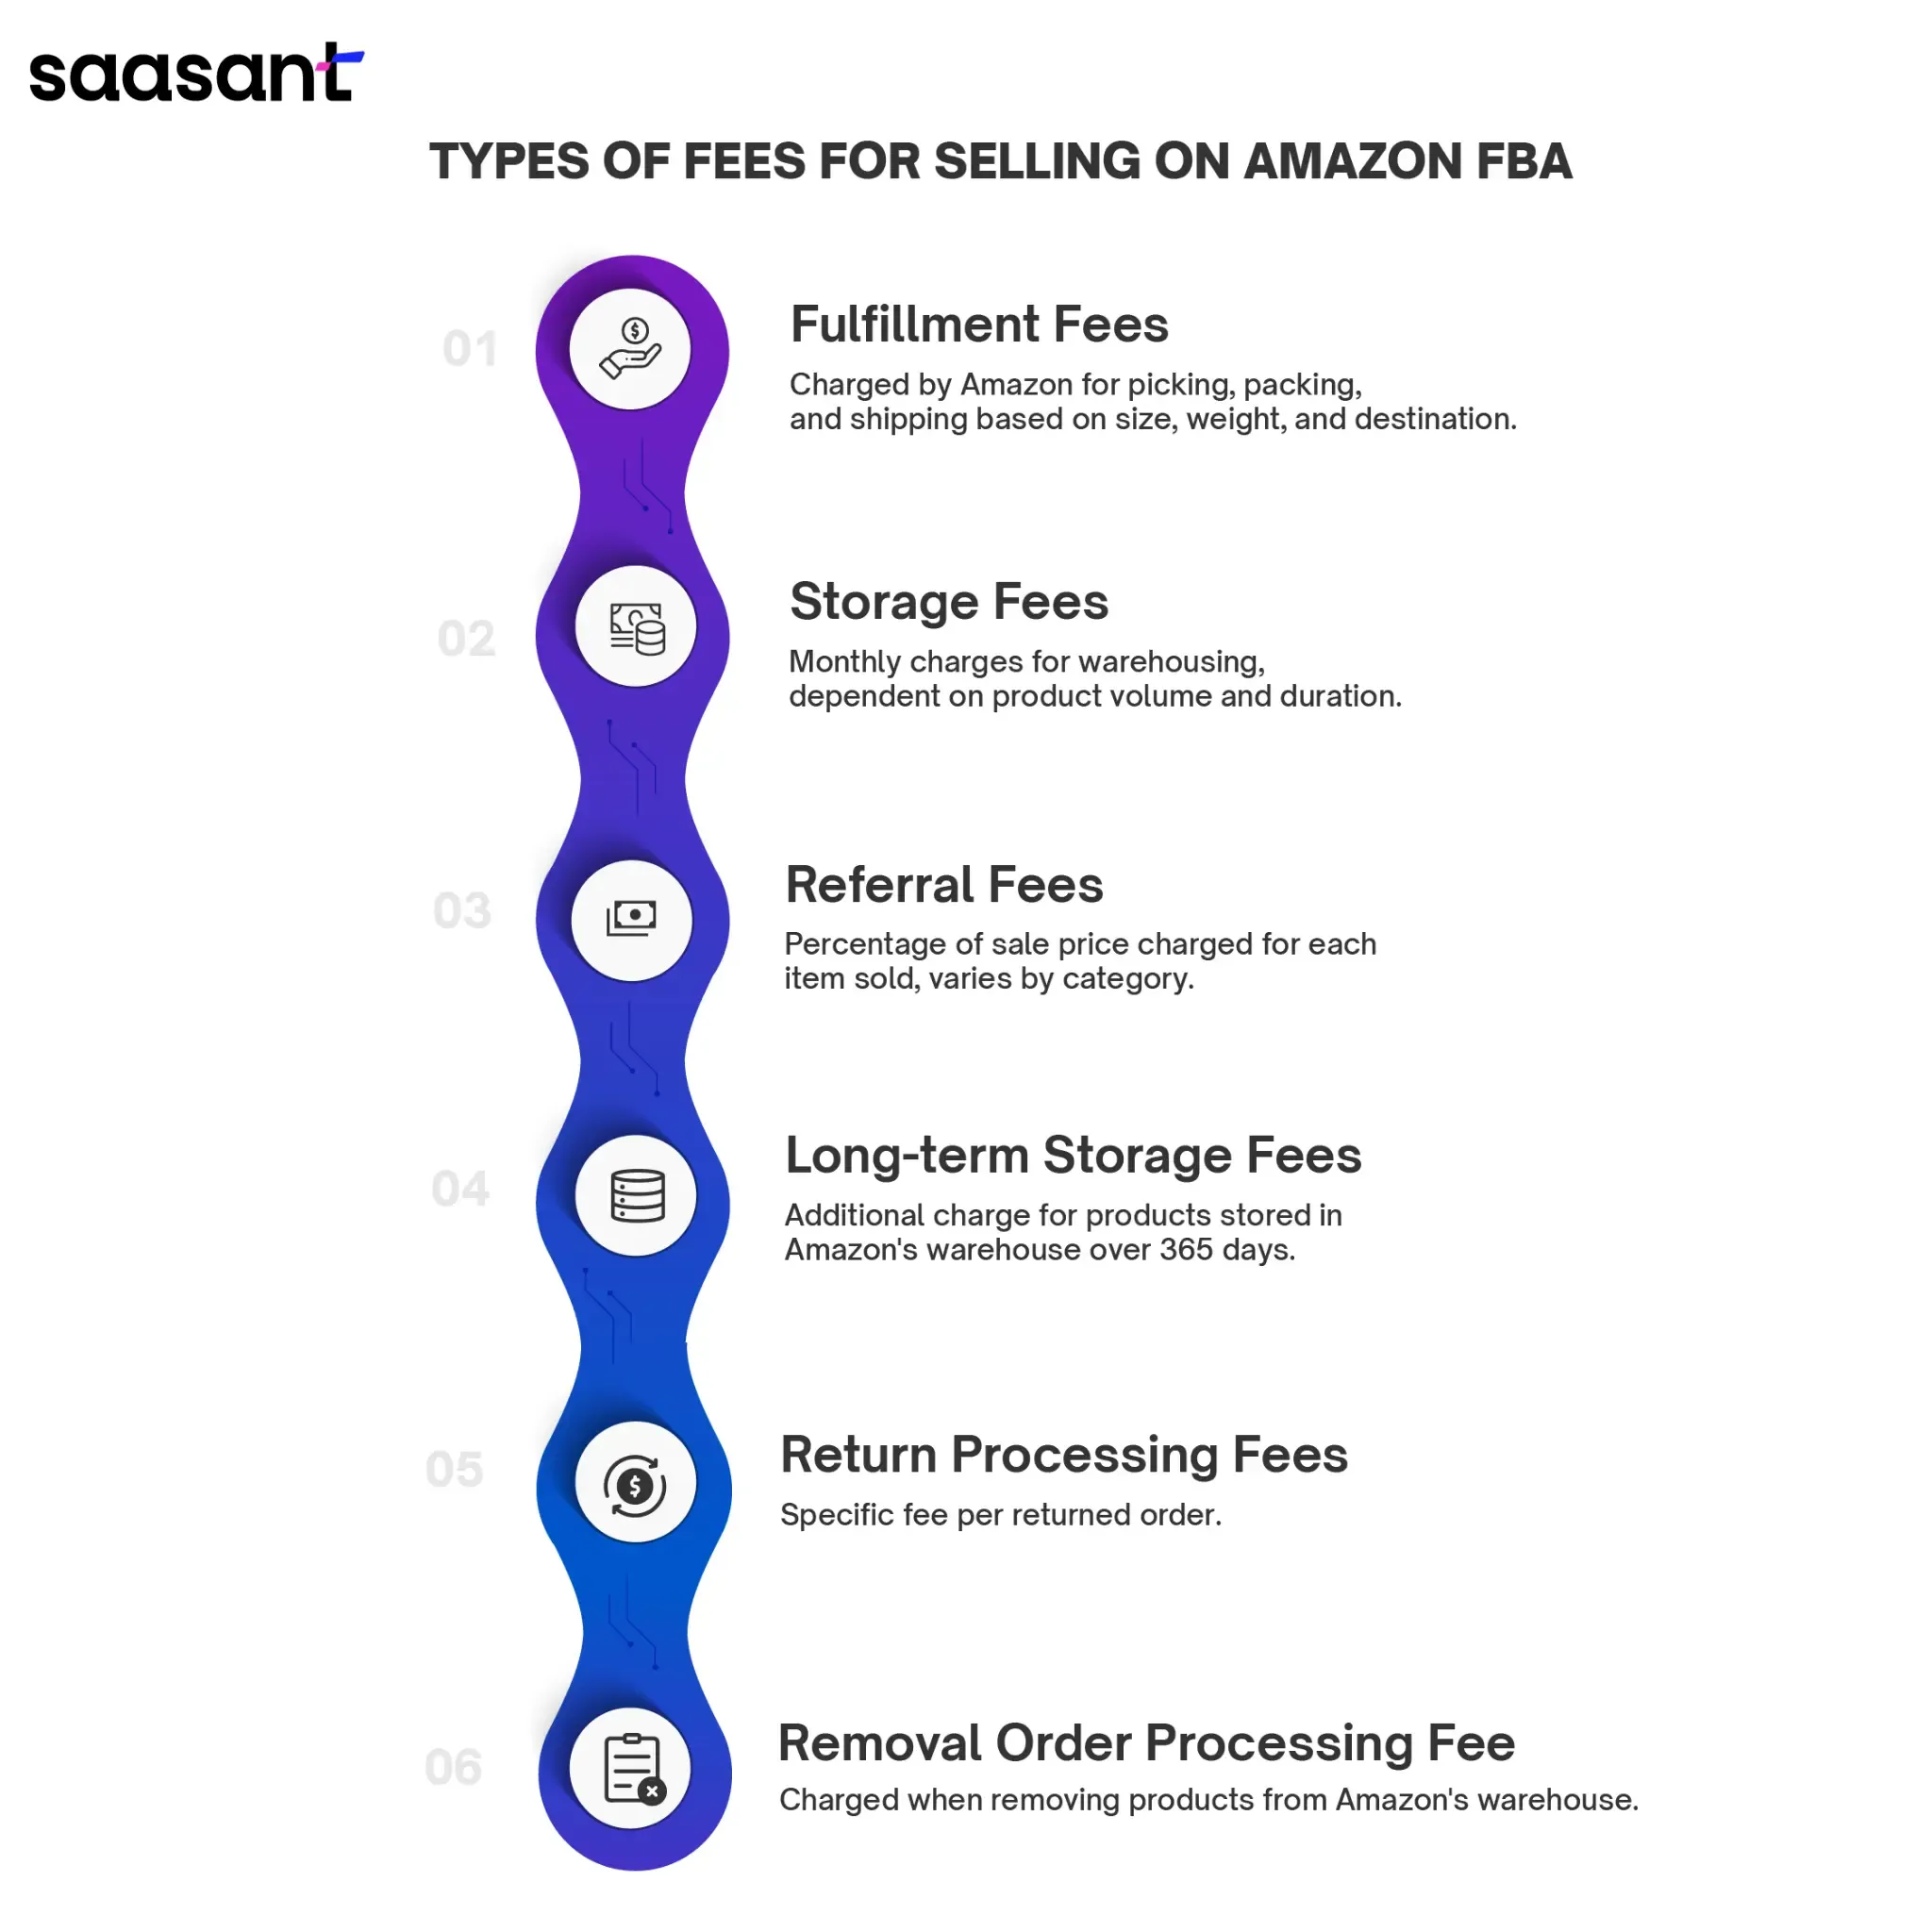 Types of fees on Amazon FBA